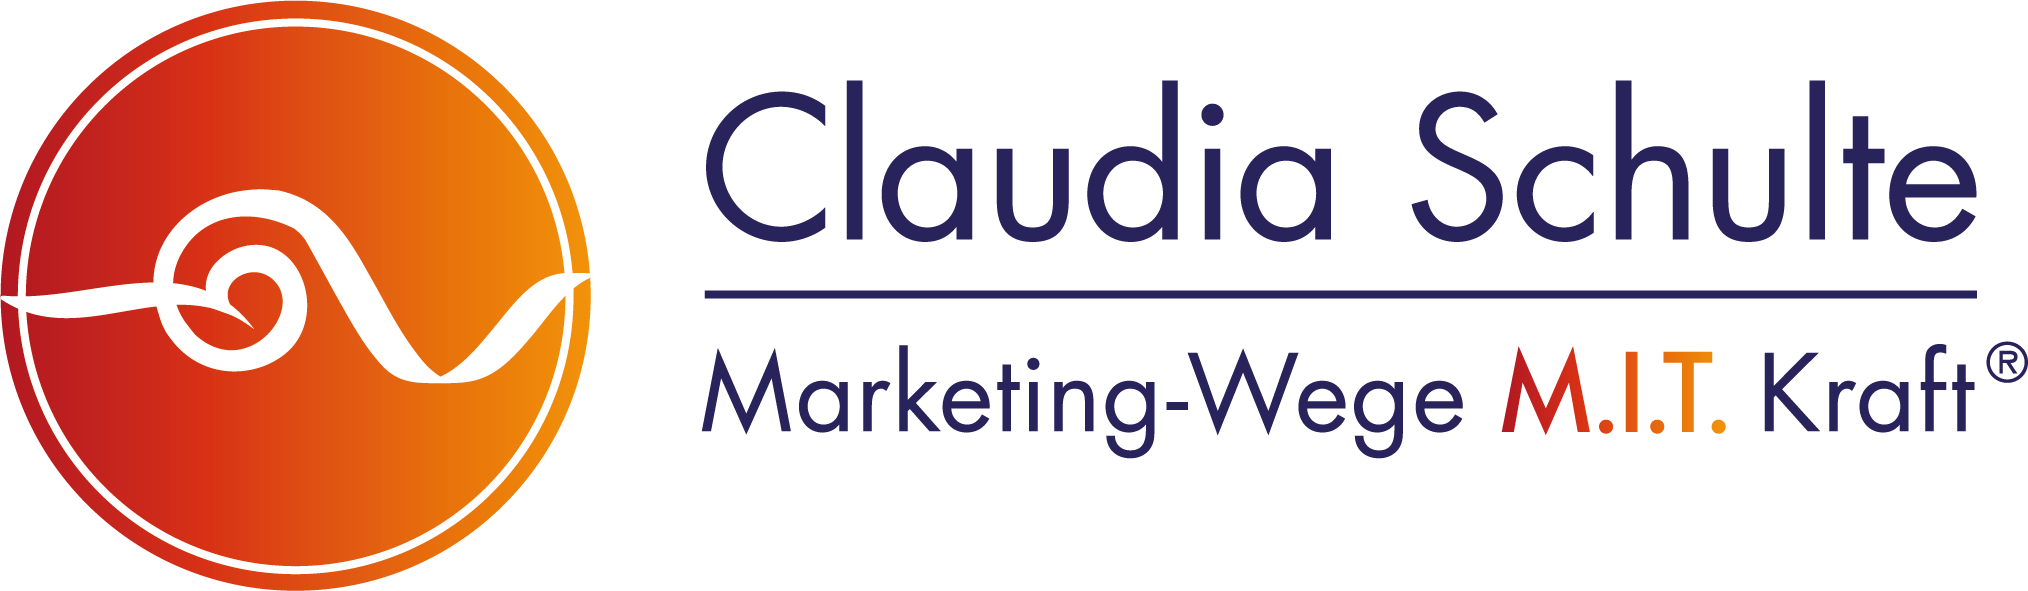 Claudia Schulte Logo